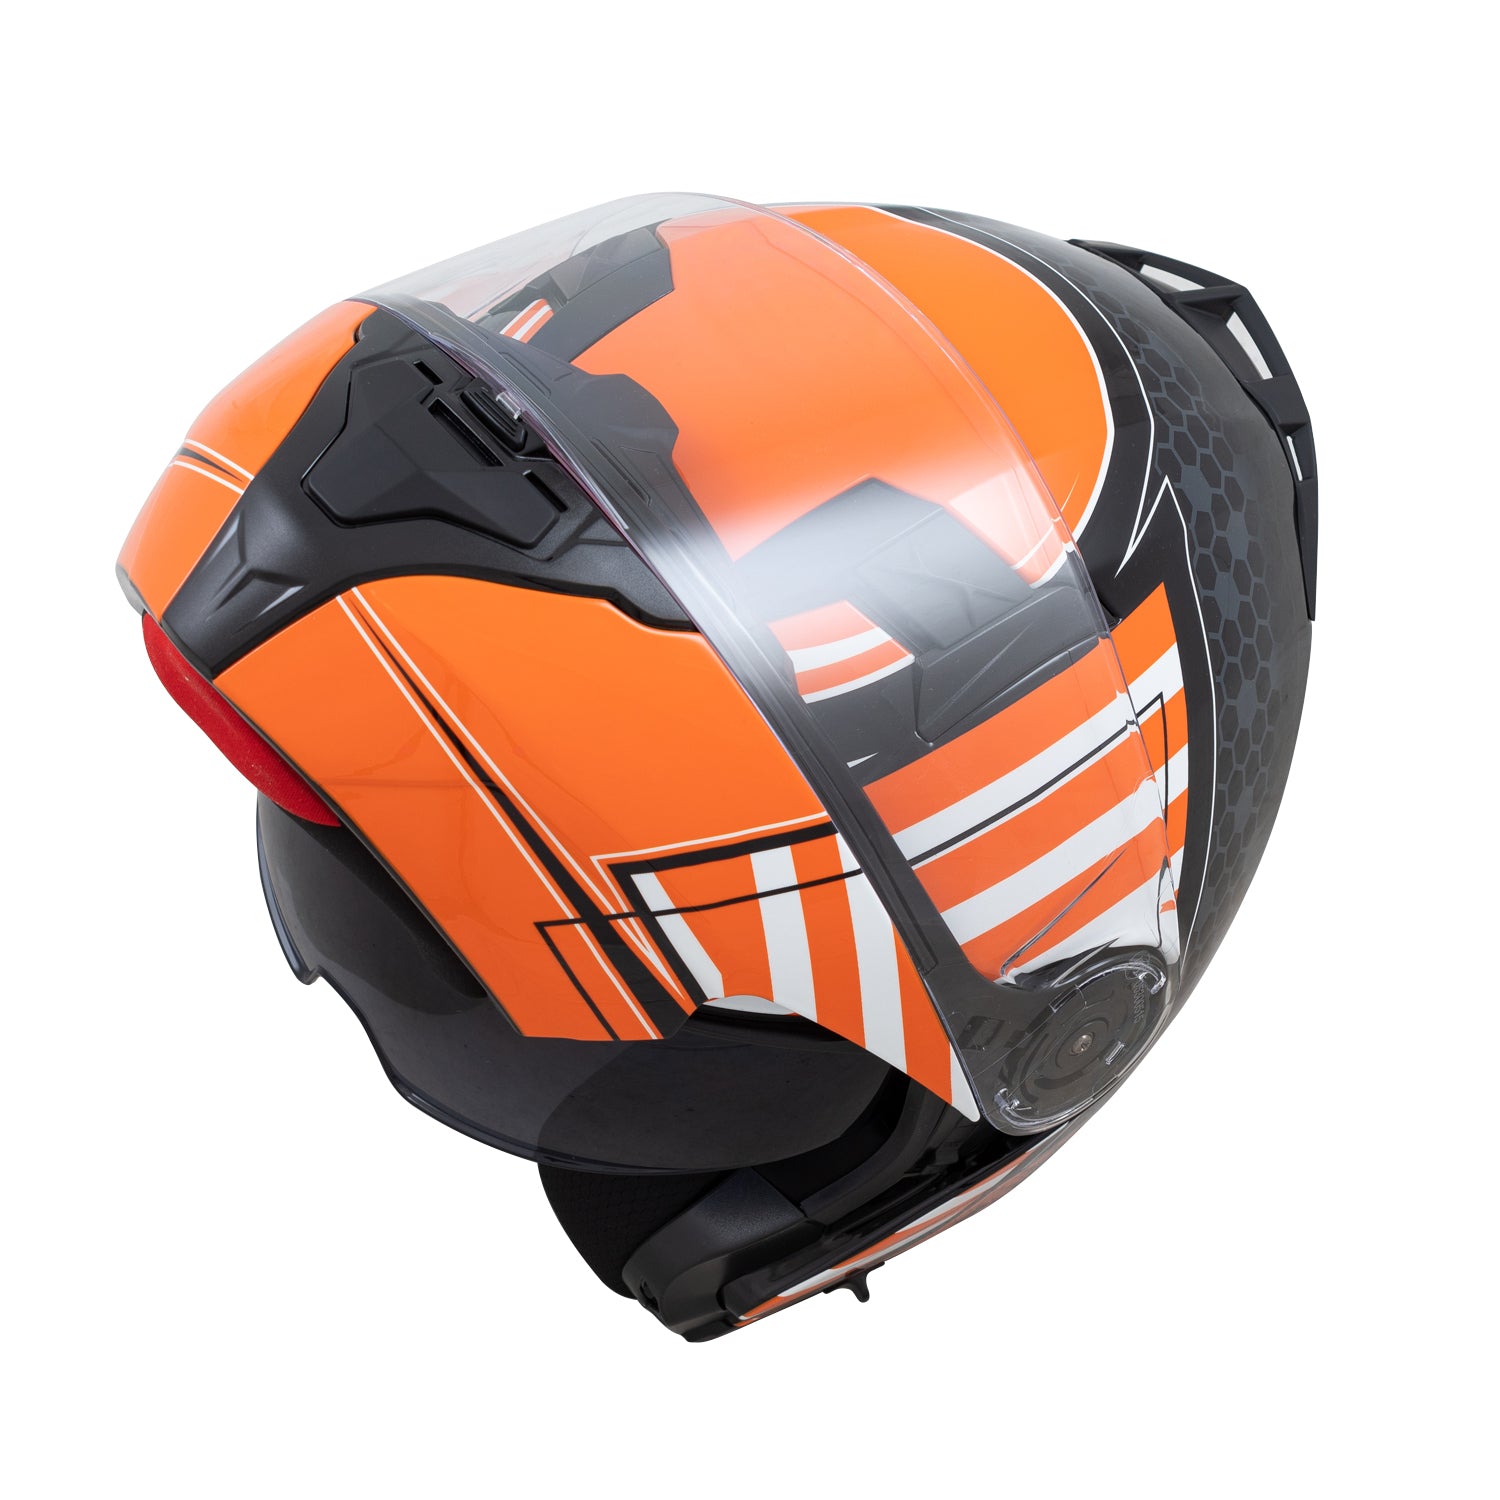 Zamp FL-4 Graphic Helmet, ECE22.05 & DOT